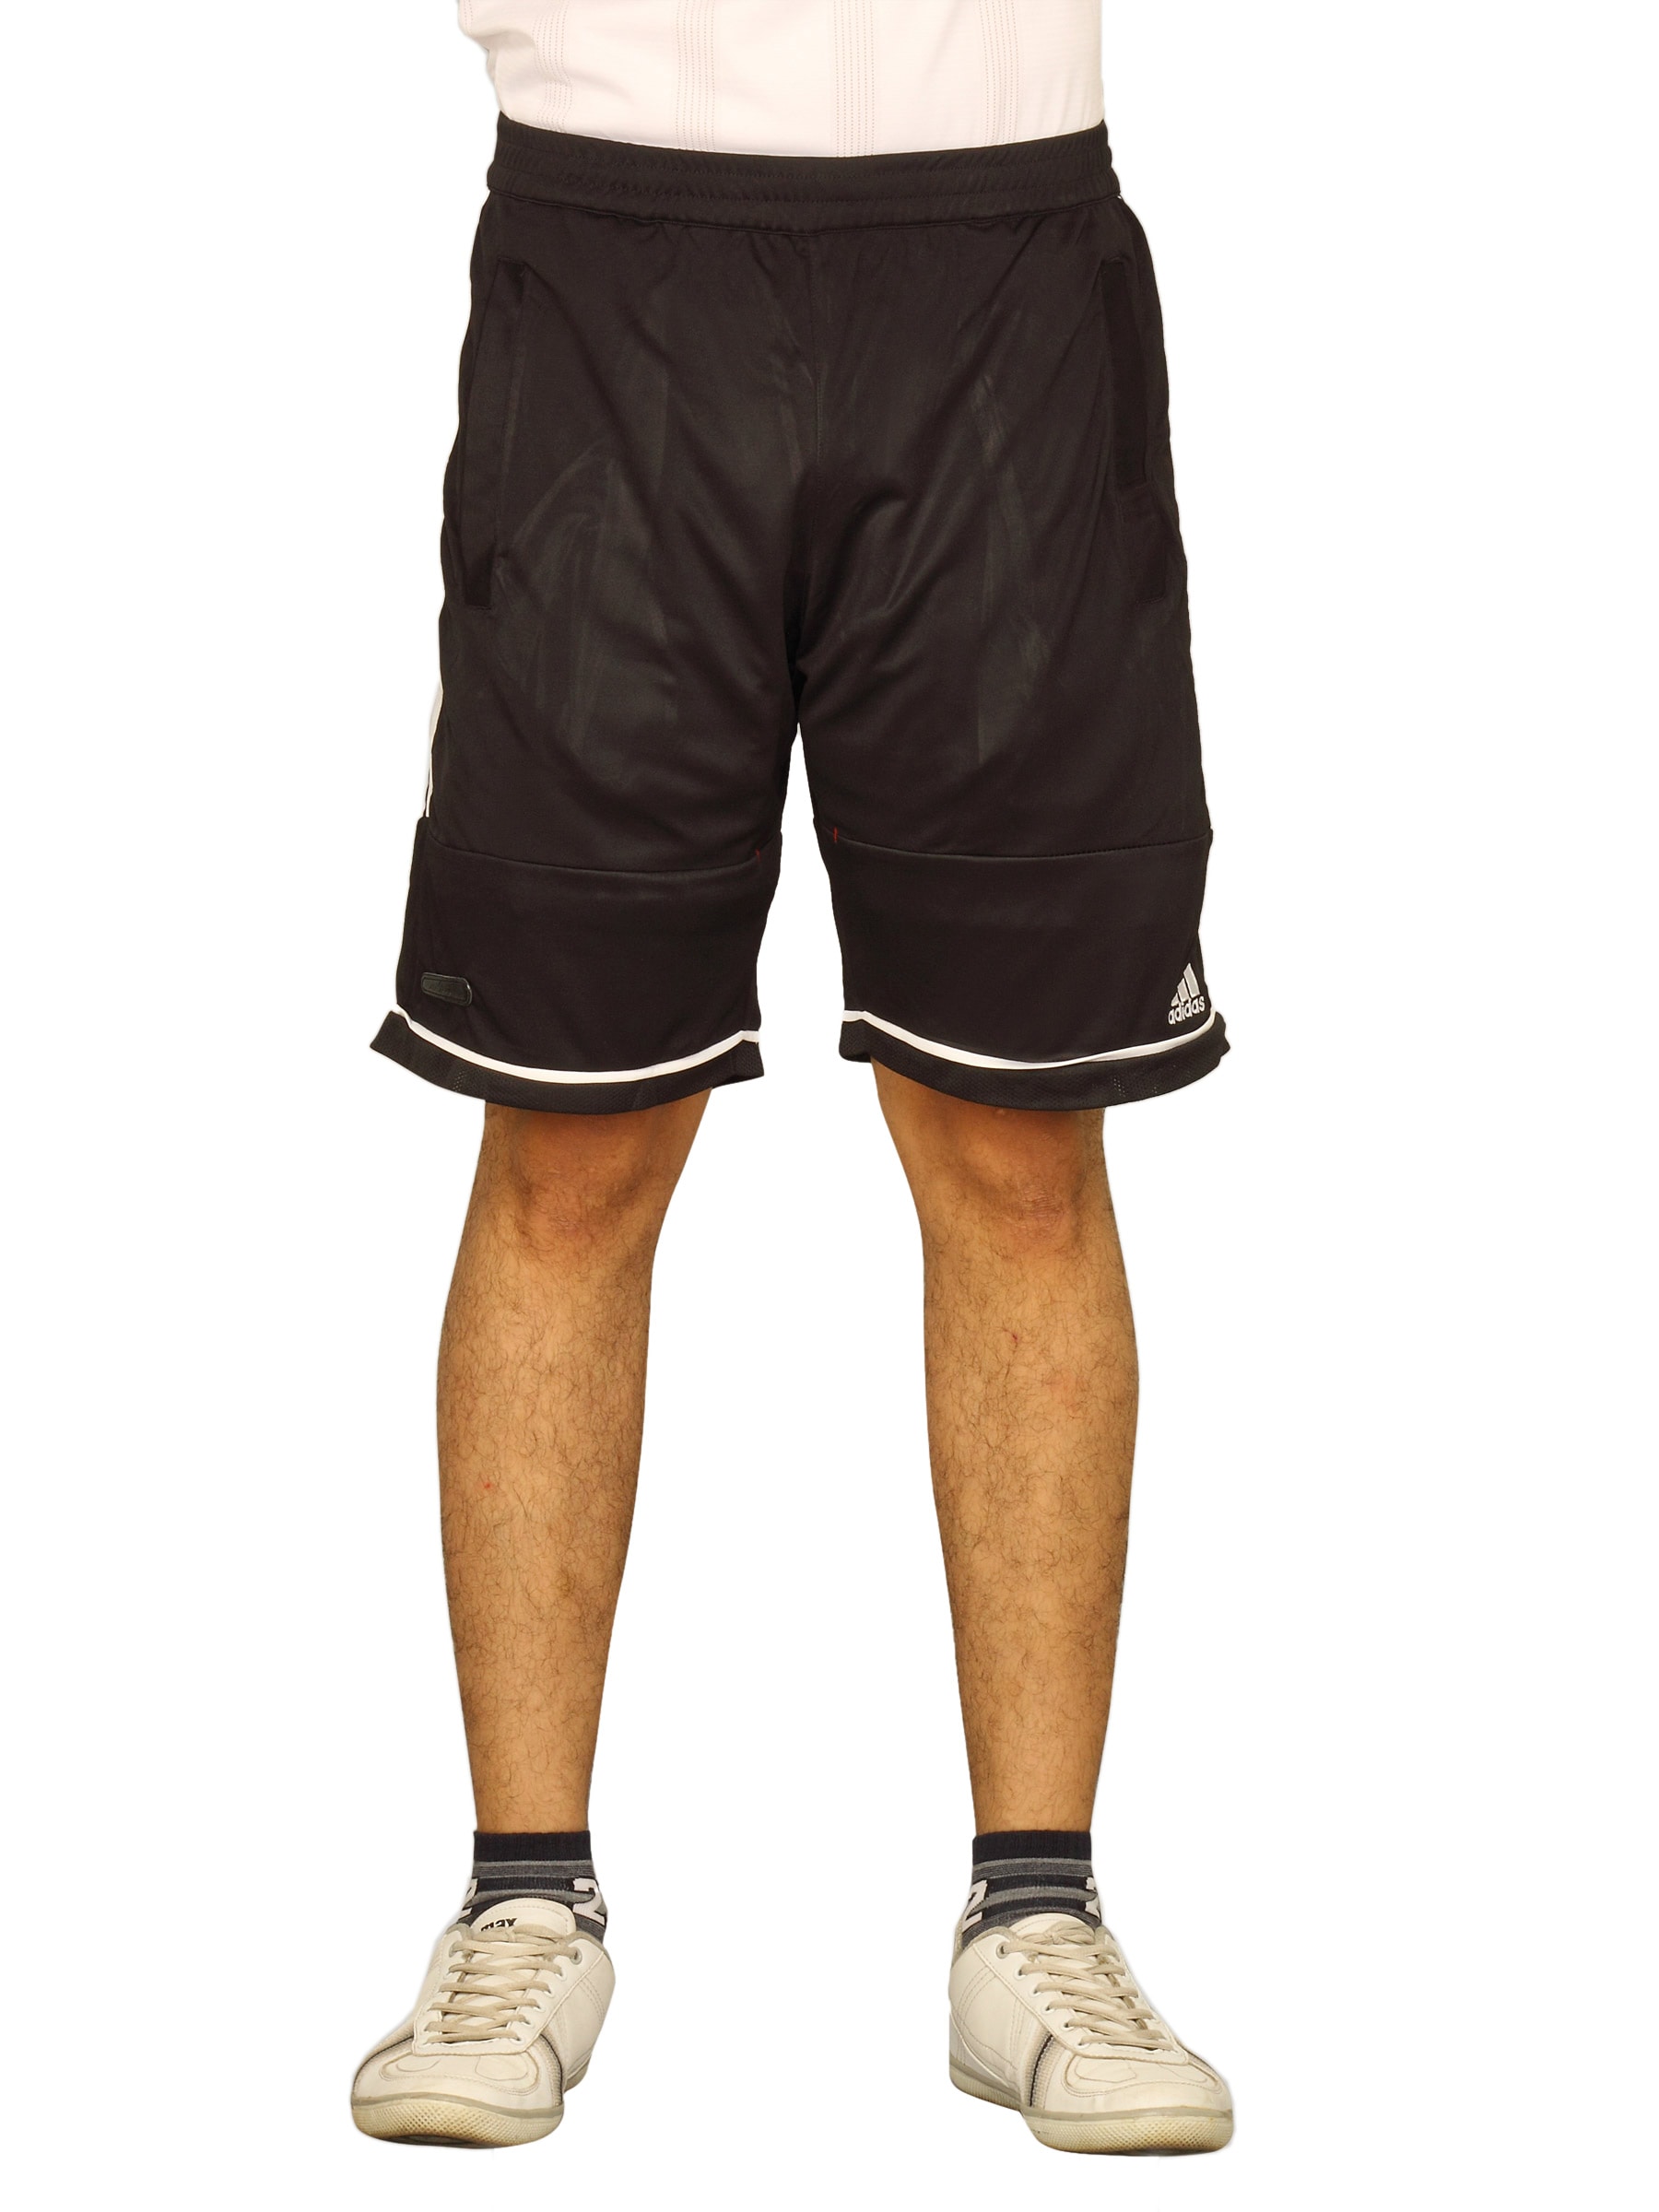 ADIDAS Men's AP ST Black White Shorts